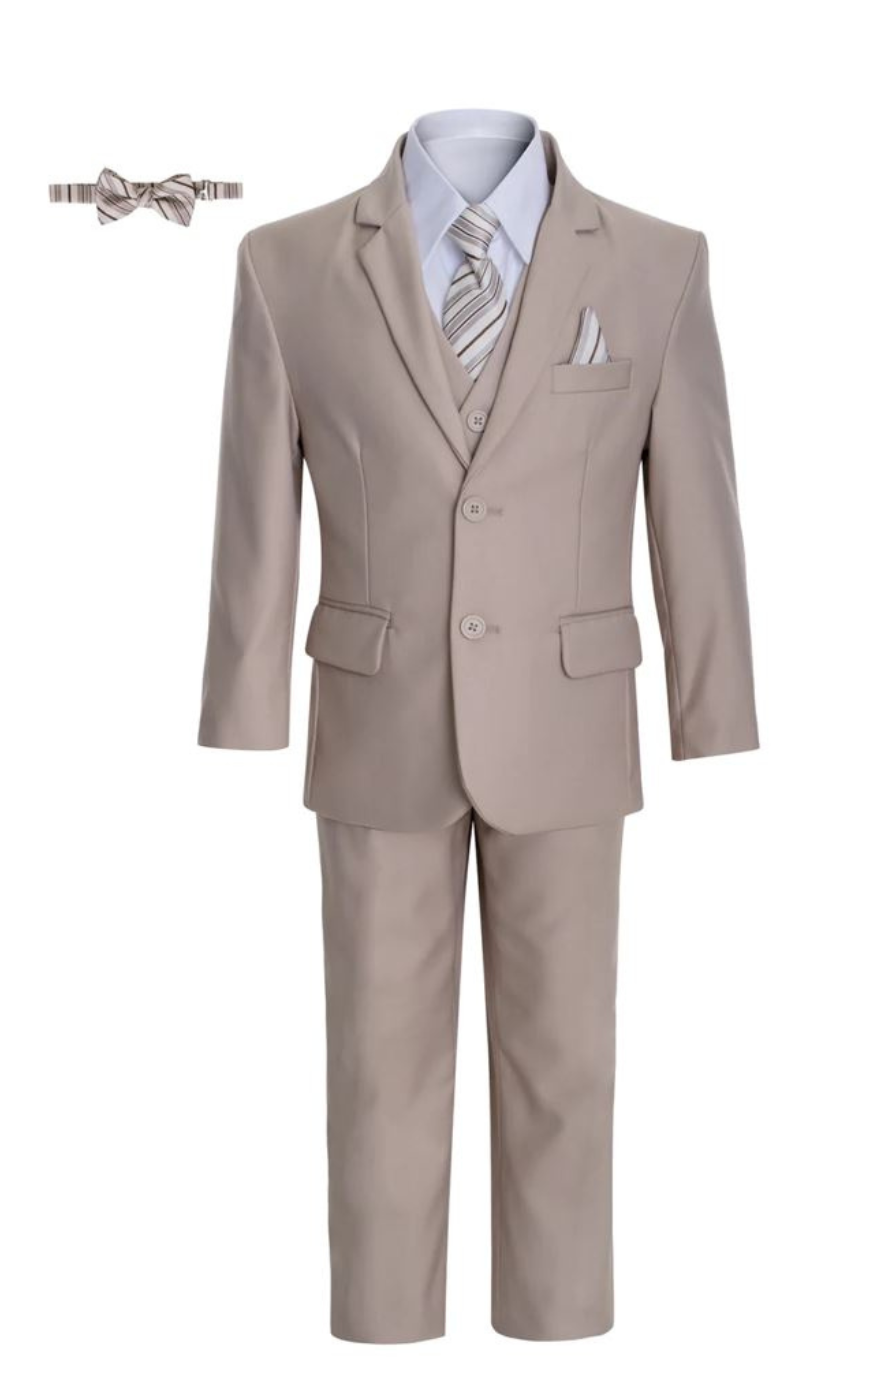 Harry Slim Suit: KHAKI/BEIGE